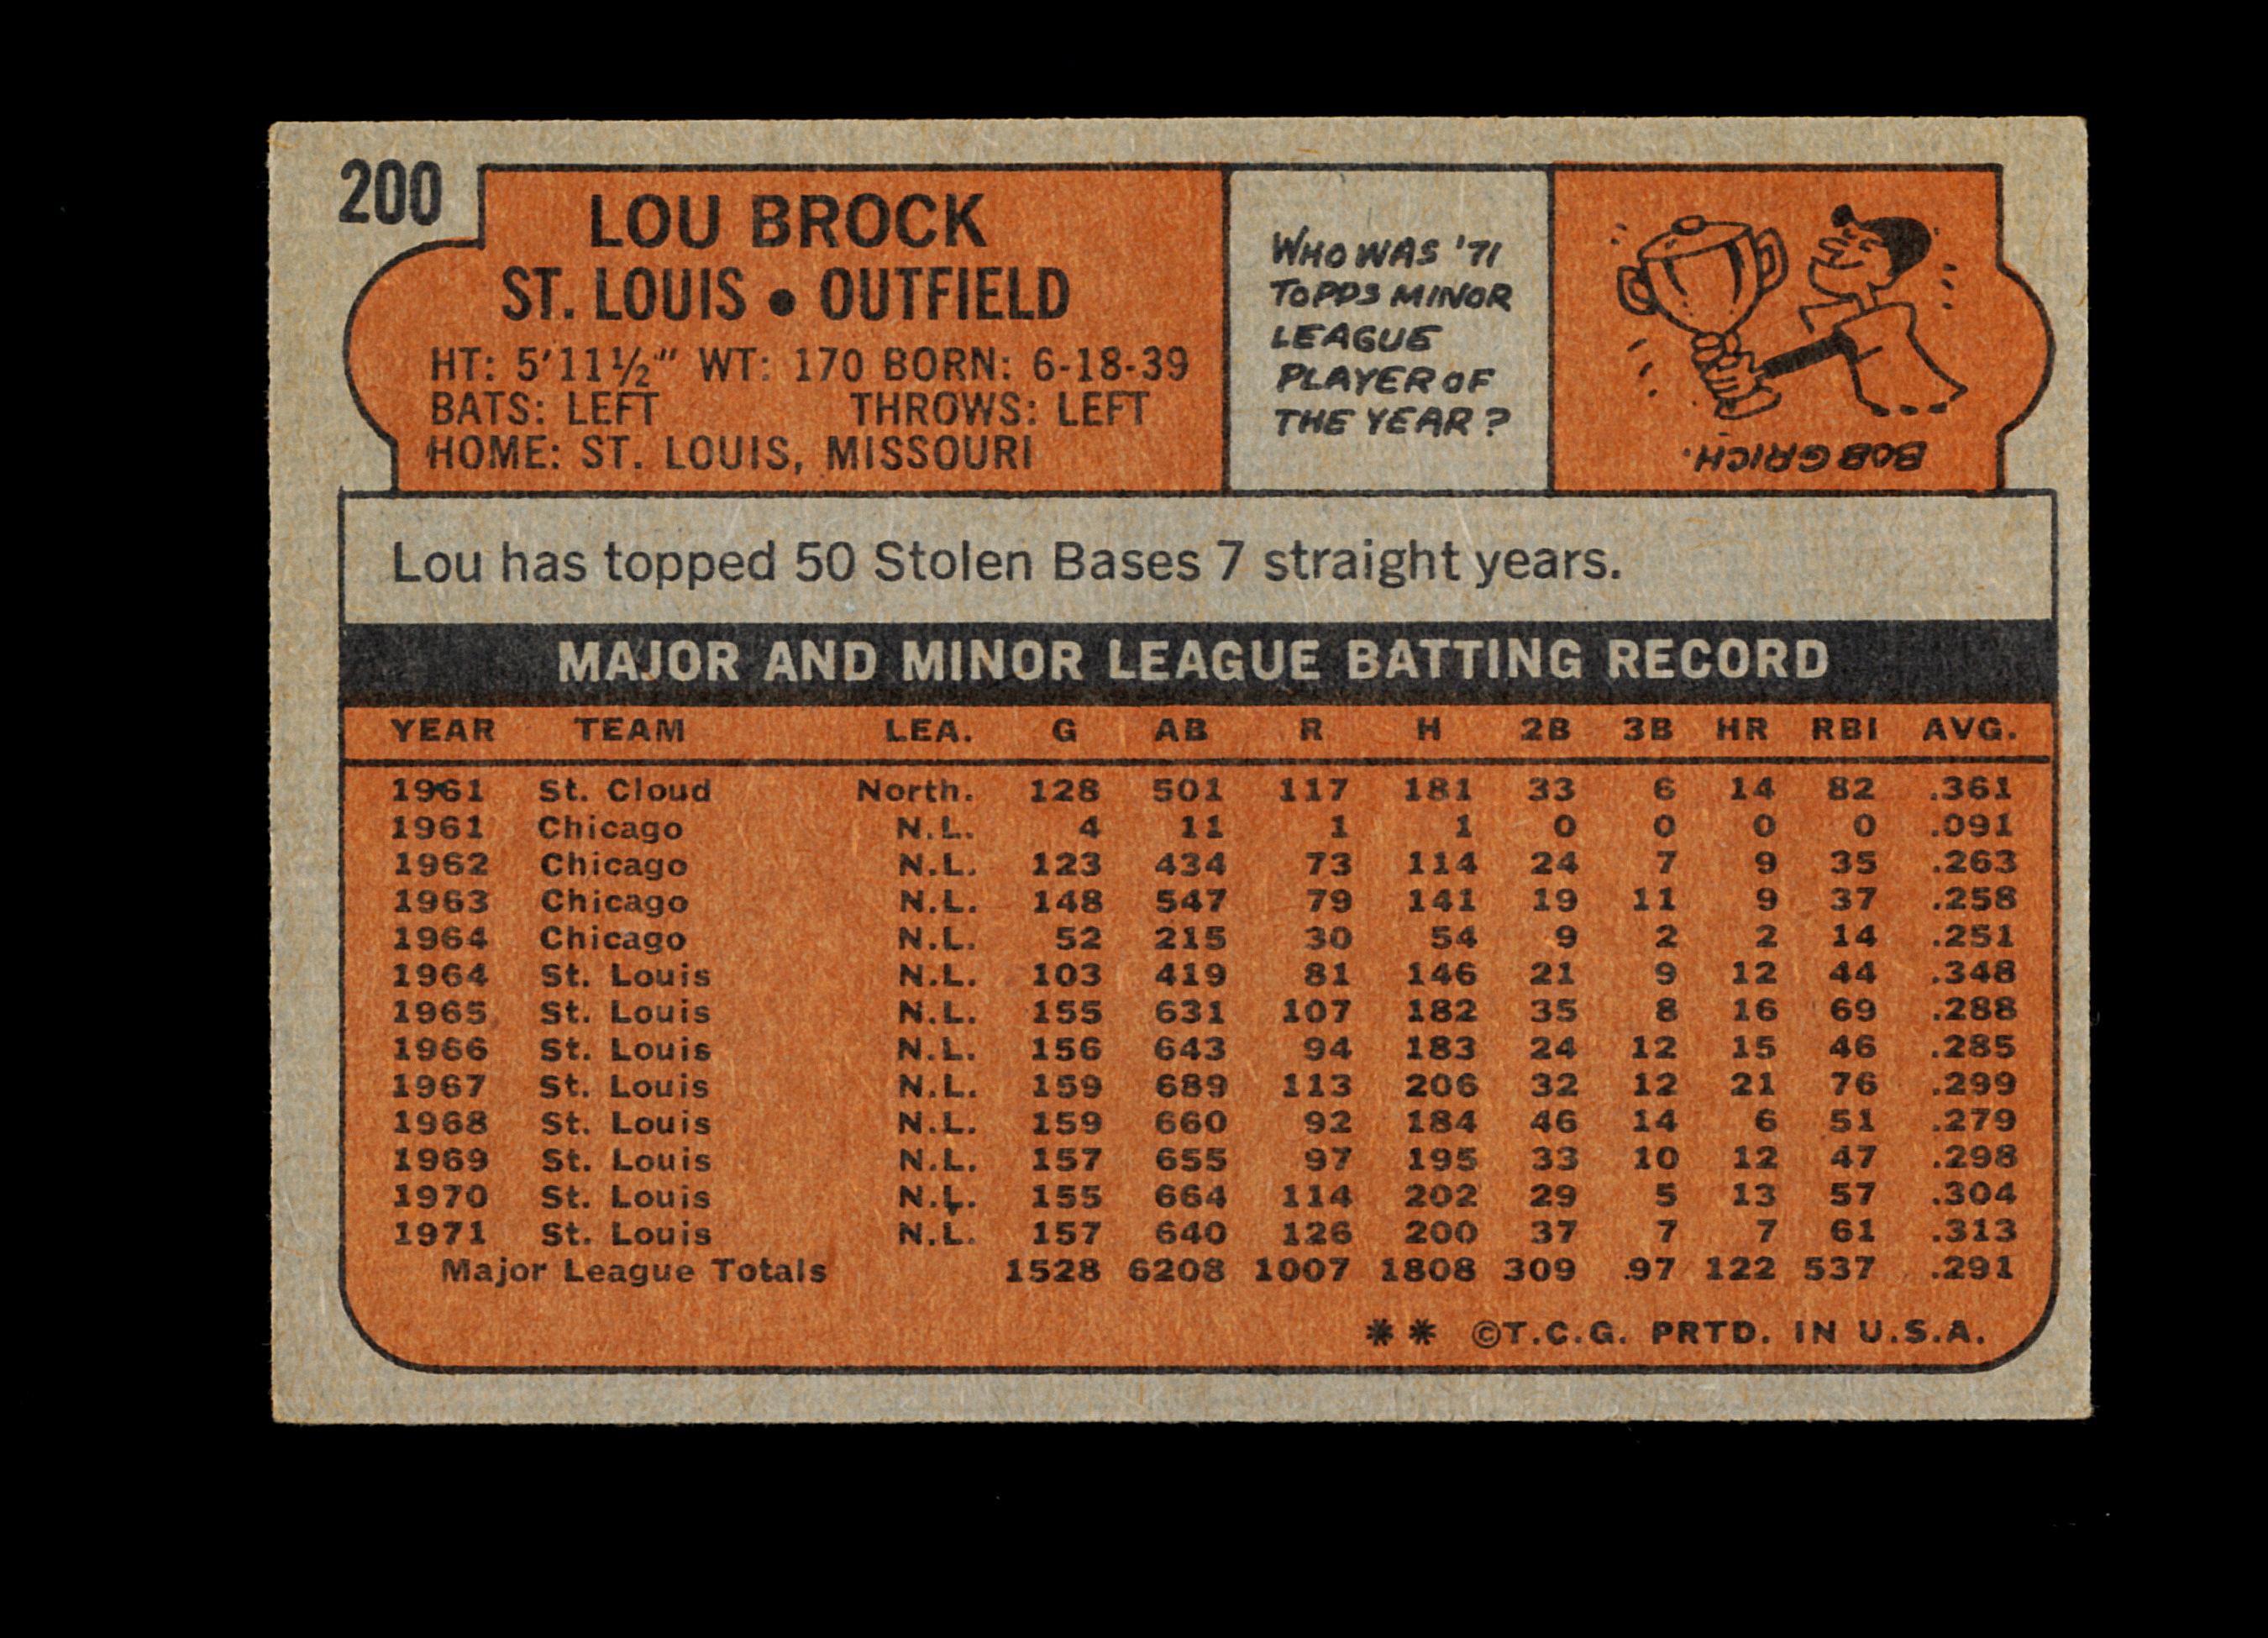 1972 Topps Baseball Card #200 Hall of Famer Lou Brock St Louis Cardinals